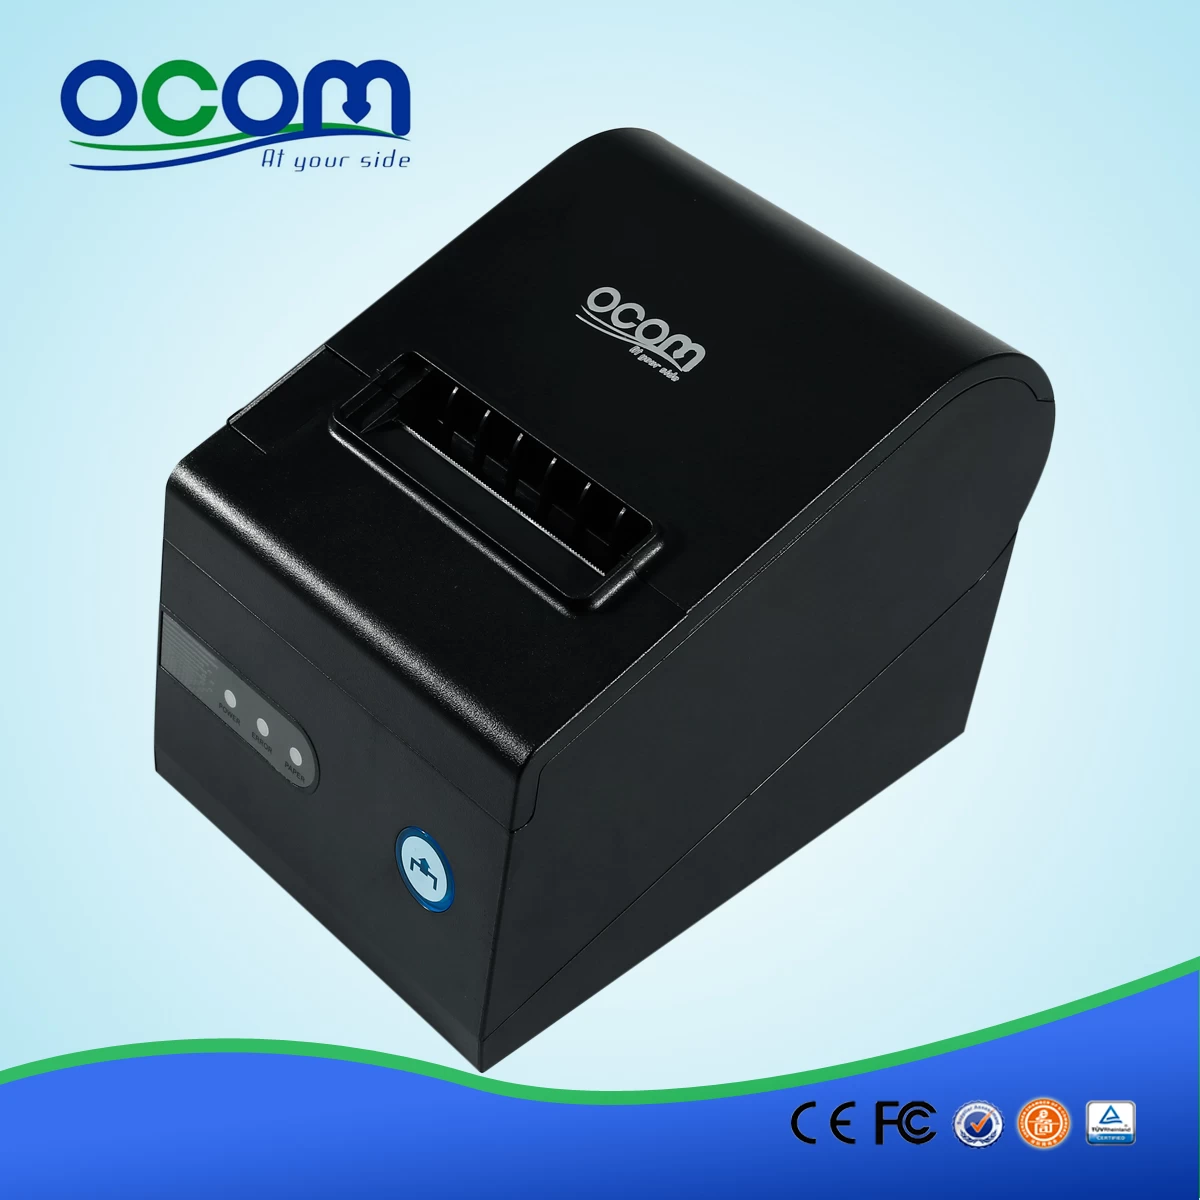 OCPP-804 Desktop Thermal Receipt Printer with USB Serial Parallel Port